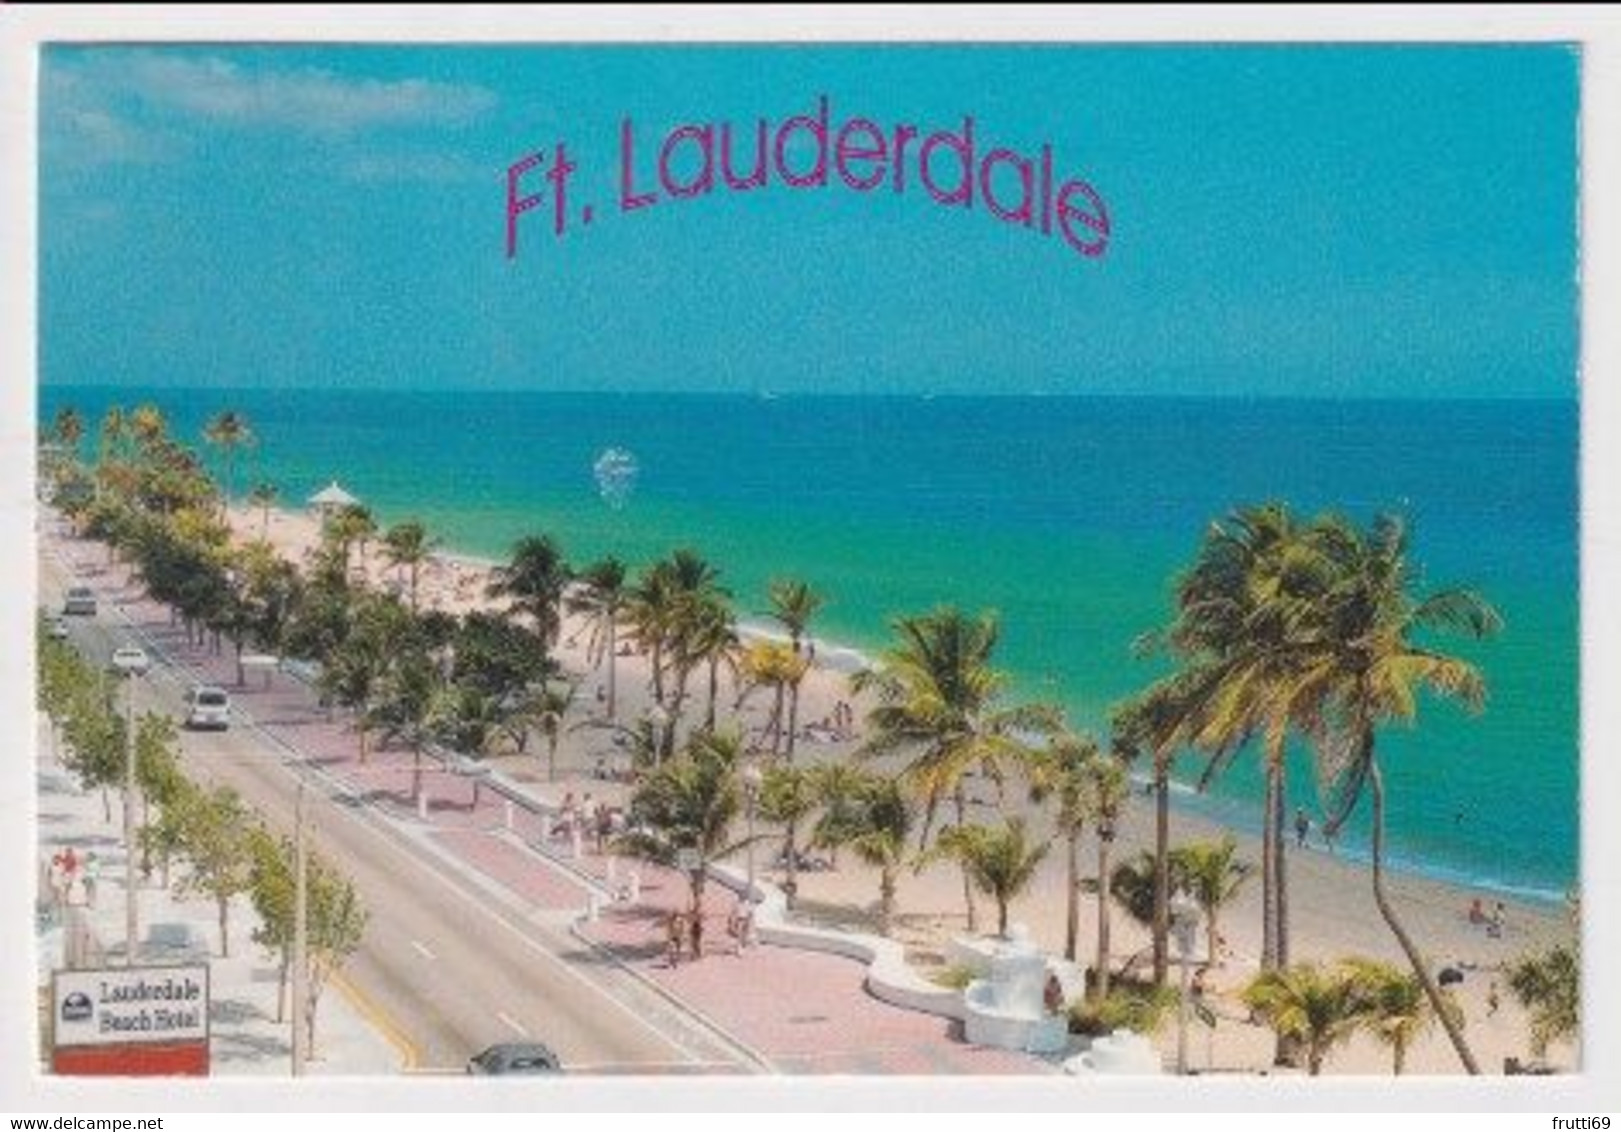 AK 033958 USA - Florida - Ft. Lauderdale - Fort Lauderdale